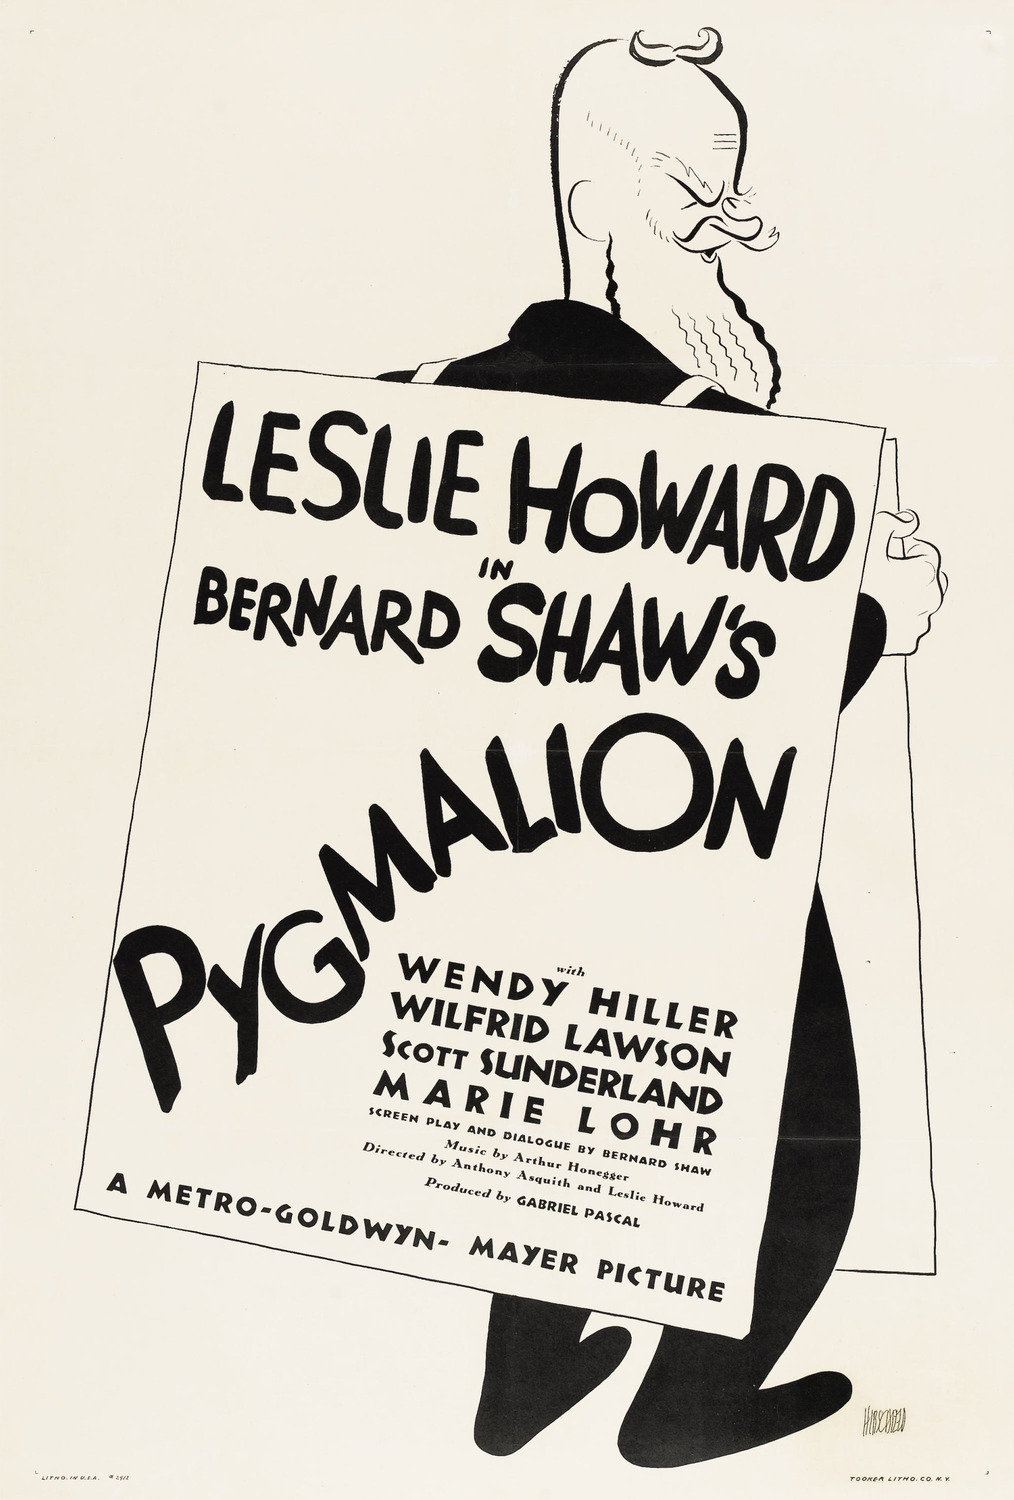 Extra Large Movie Poster Image for Pygmalion (#1 of 2)